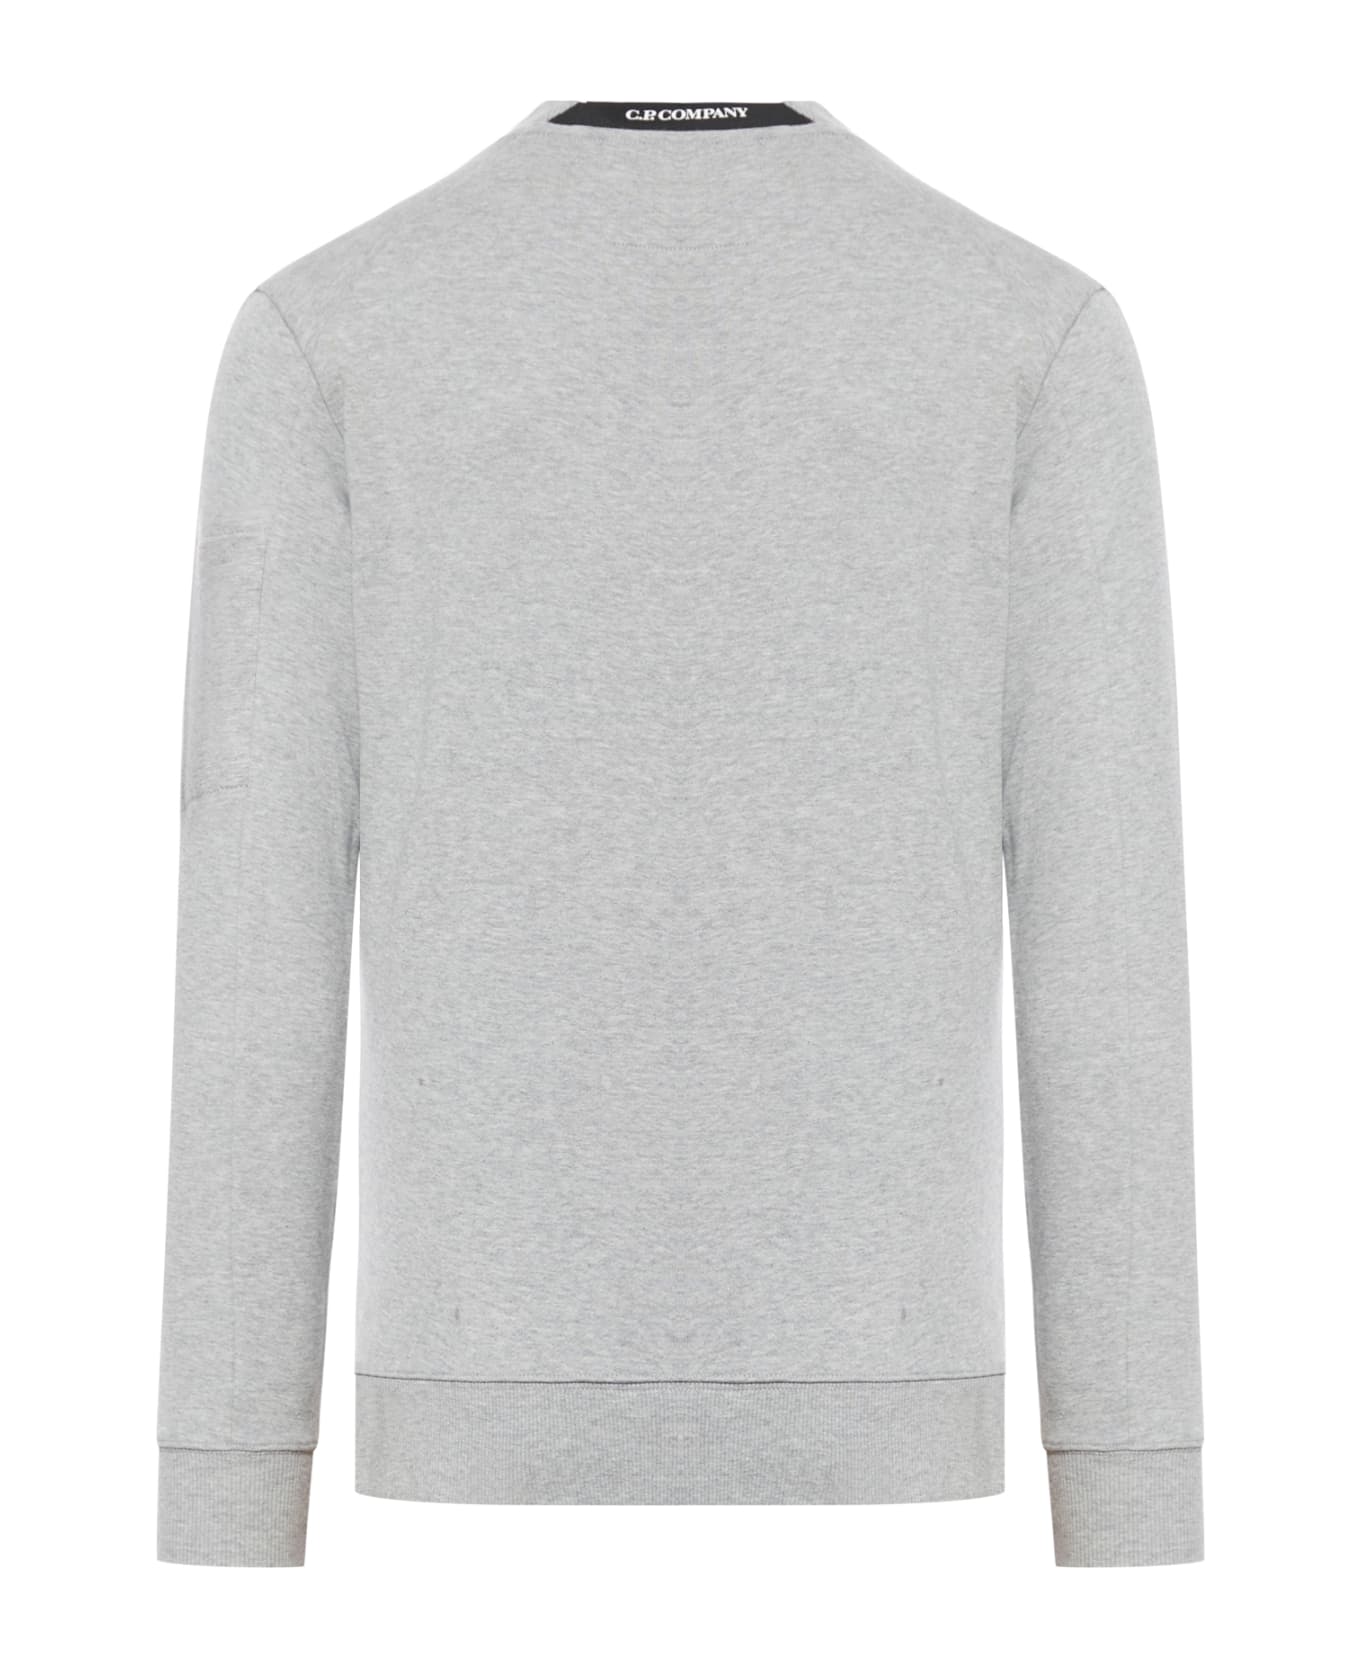 C.P. Company 'diagonal Raised Fleece' Grey Cotton Sweatshirt - Grey Melange